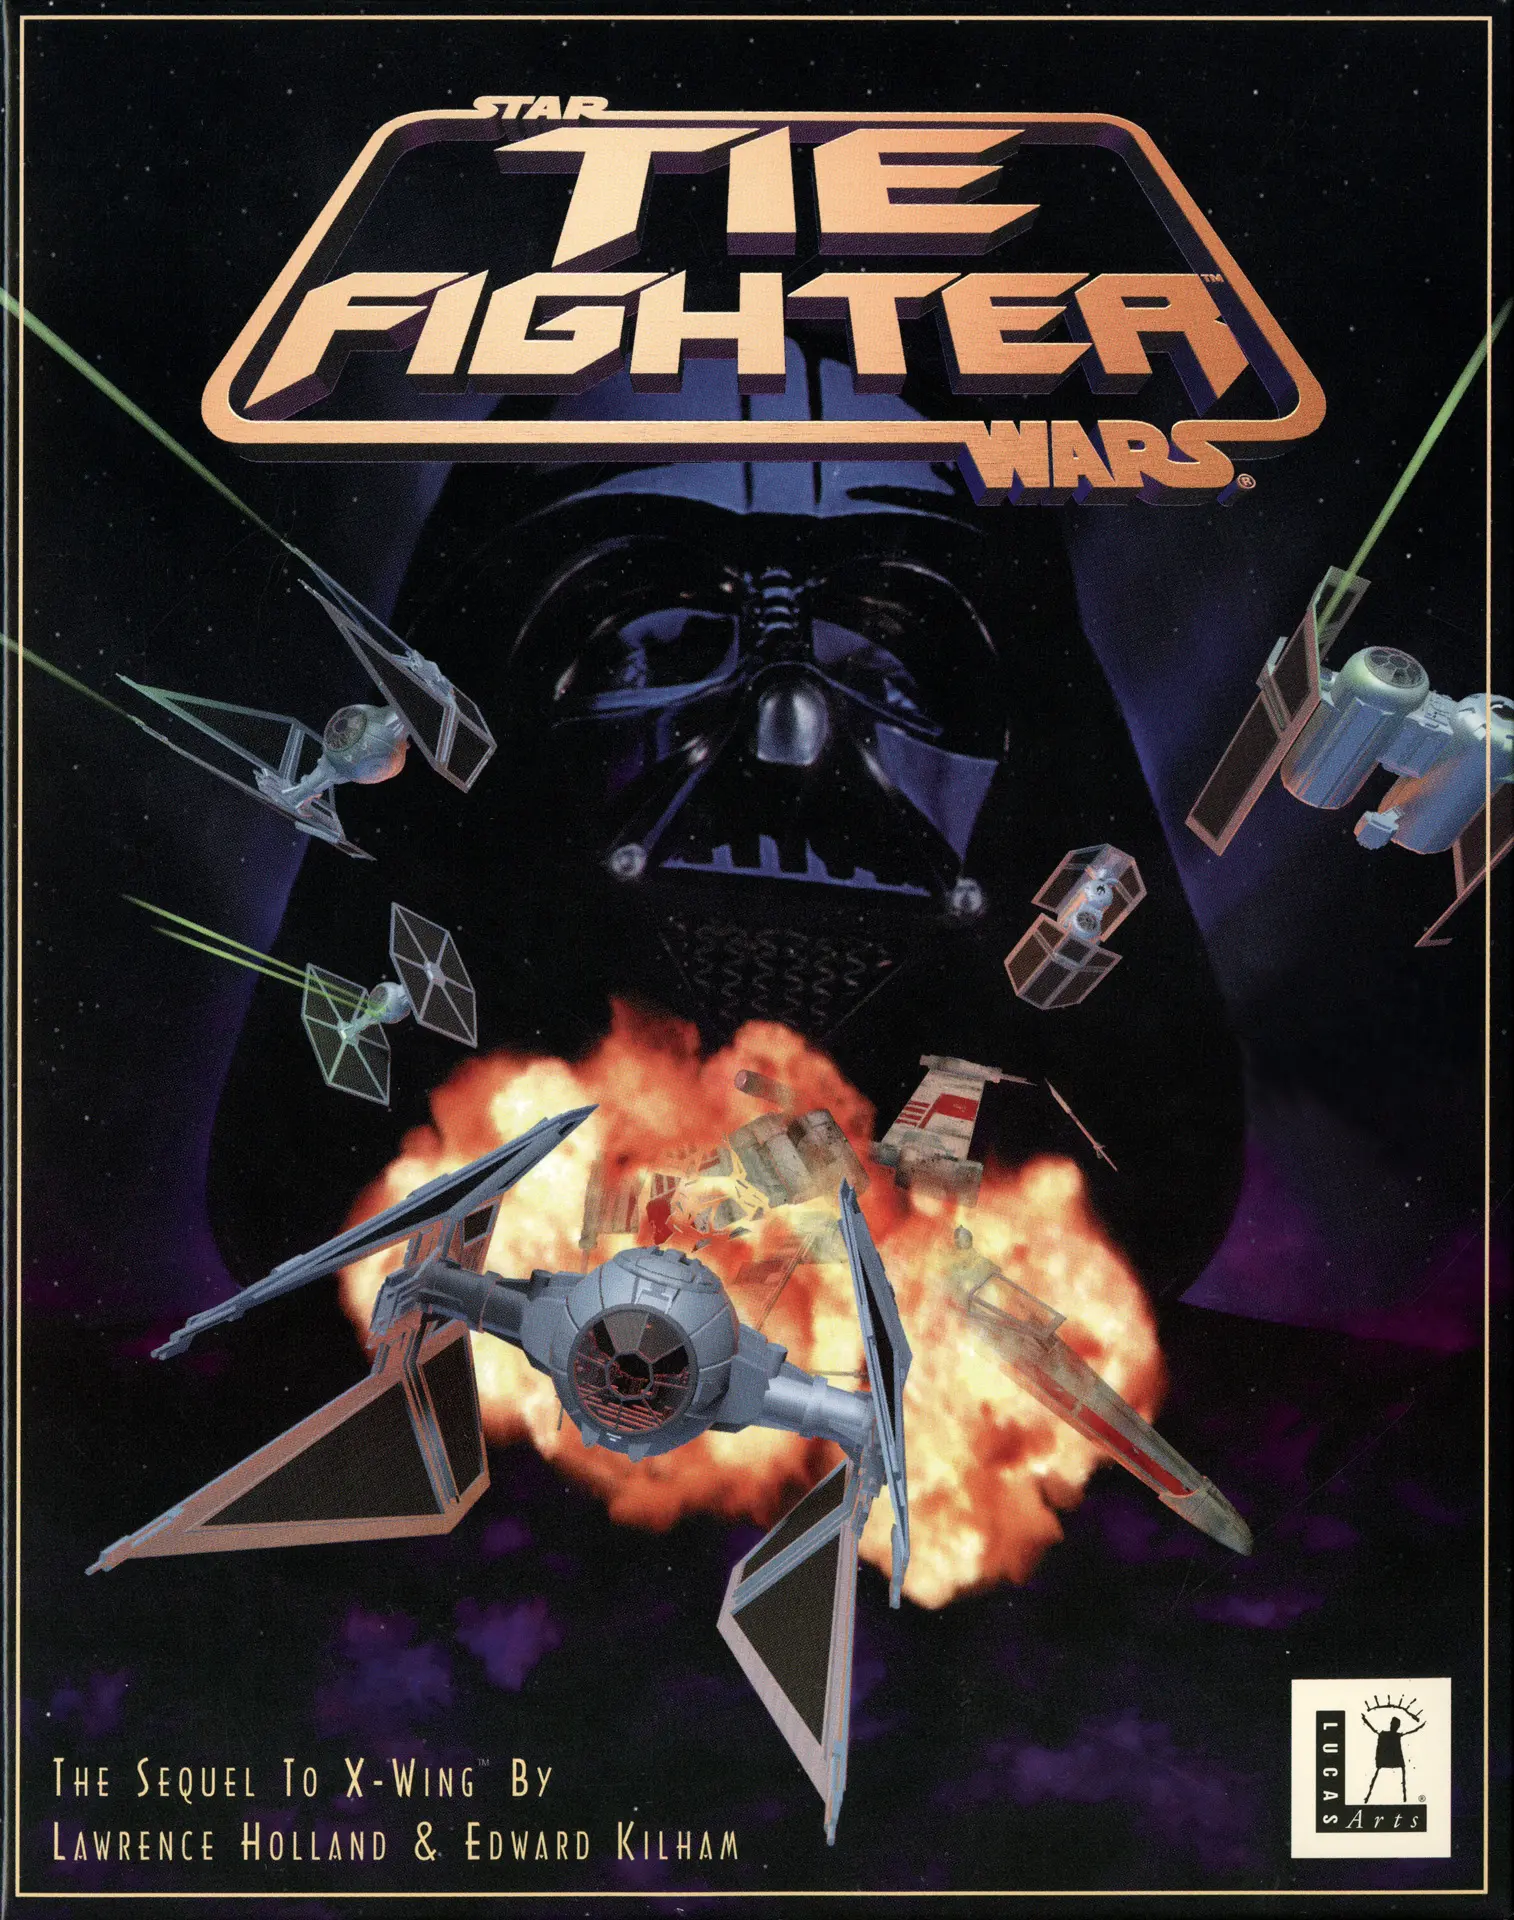 Star Wars: TIE Fighter Special Edition (PC / Mac) - Steam - Digital Code